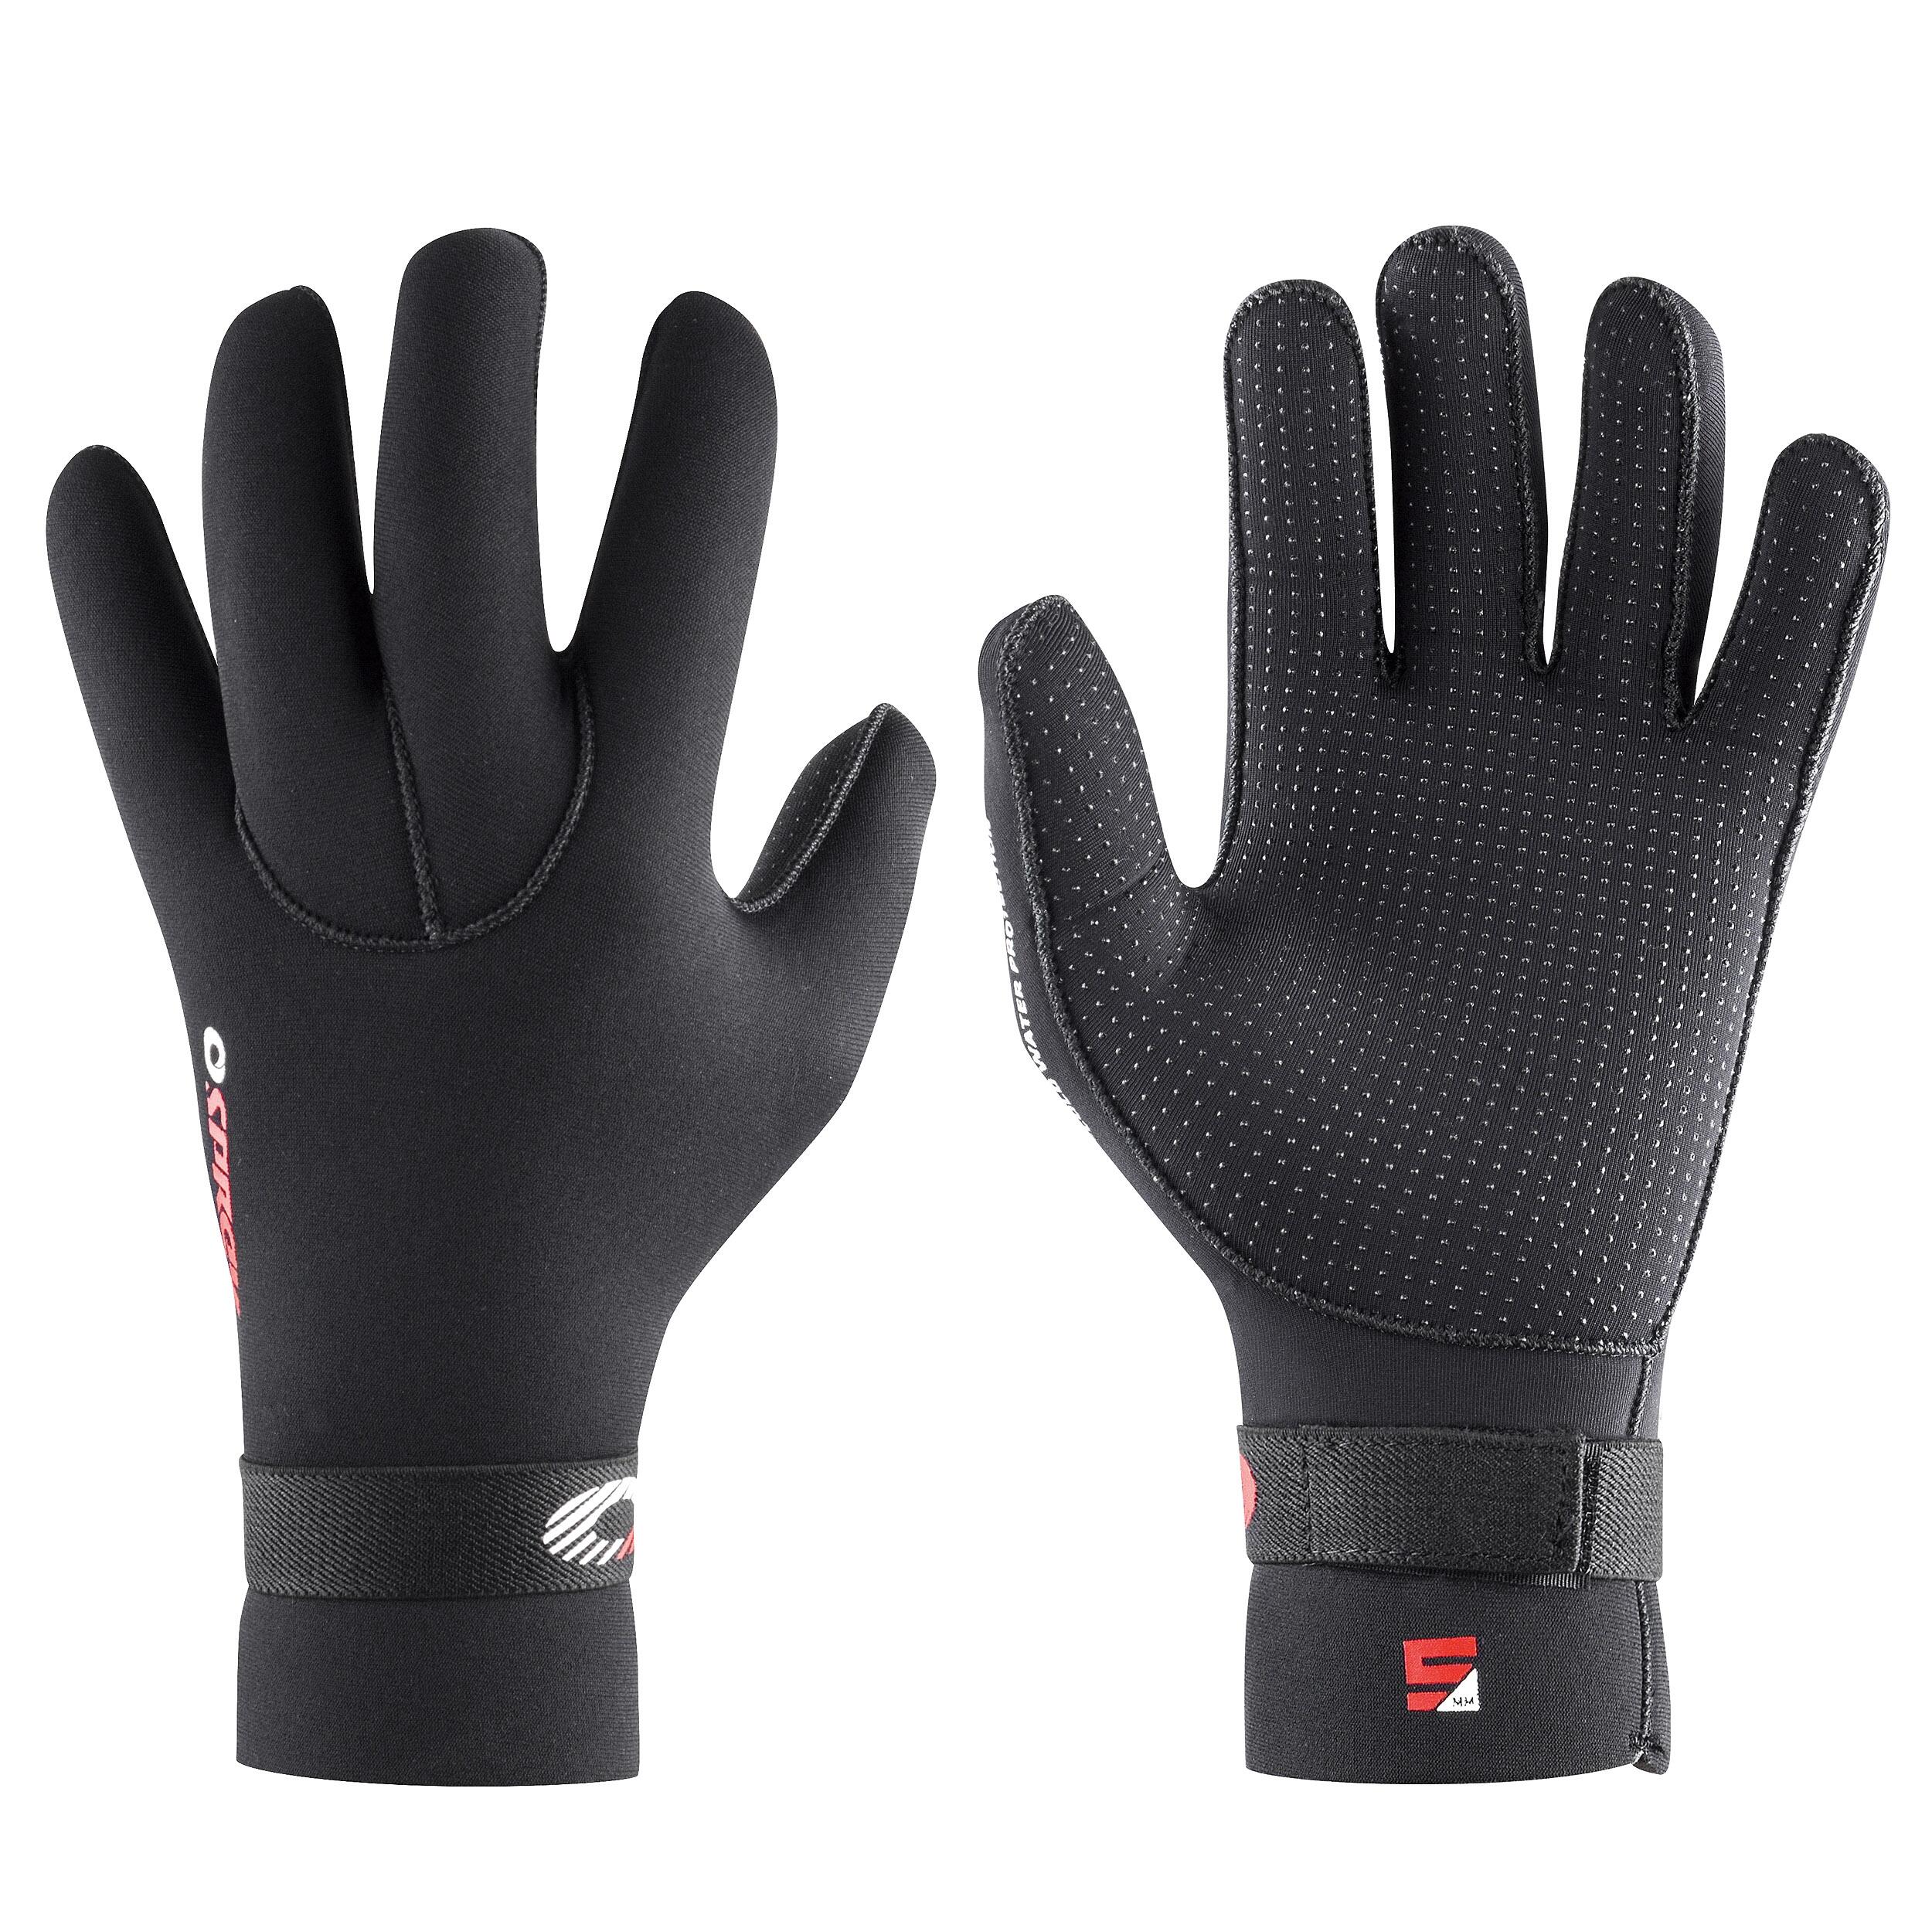 OSPREY ACTION SPORTS Osprey Wetsuit Glove, Adult 5mm Neoprene Thermal, Anti-Slip Glove Black